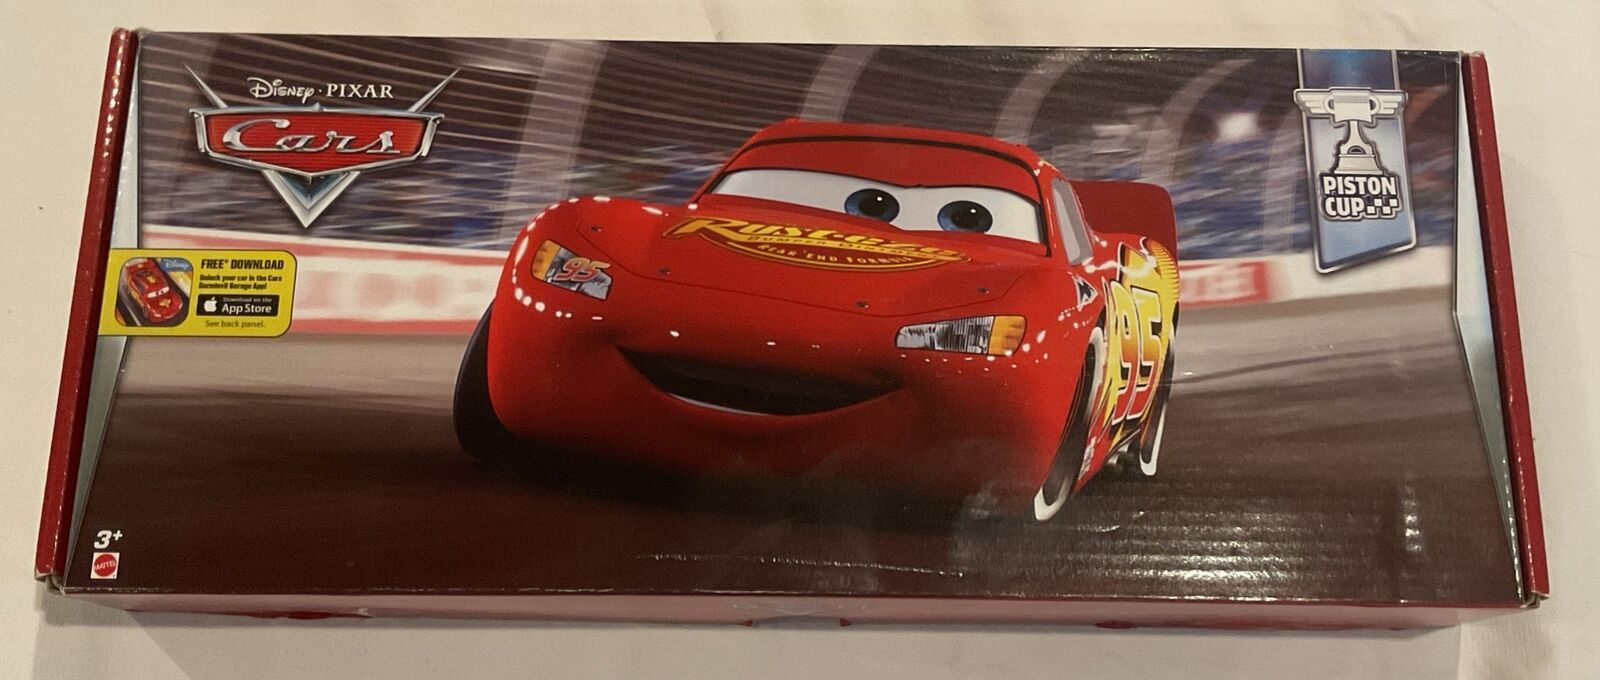 2015 Mattel Disney Pixar Cars Complete Piston Cup Series 11 Diecast New w/ Box